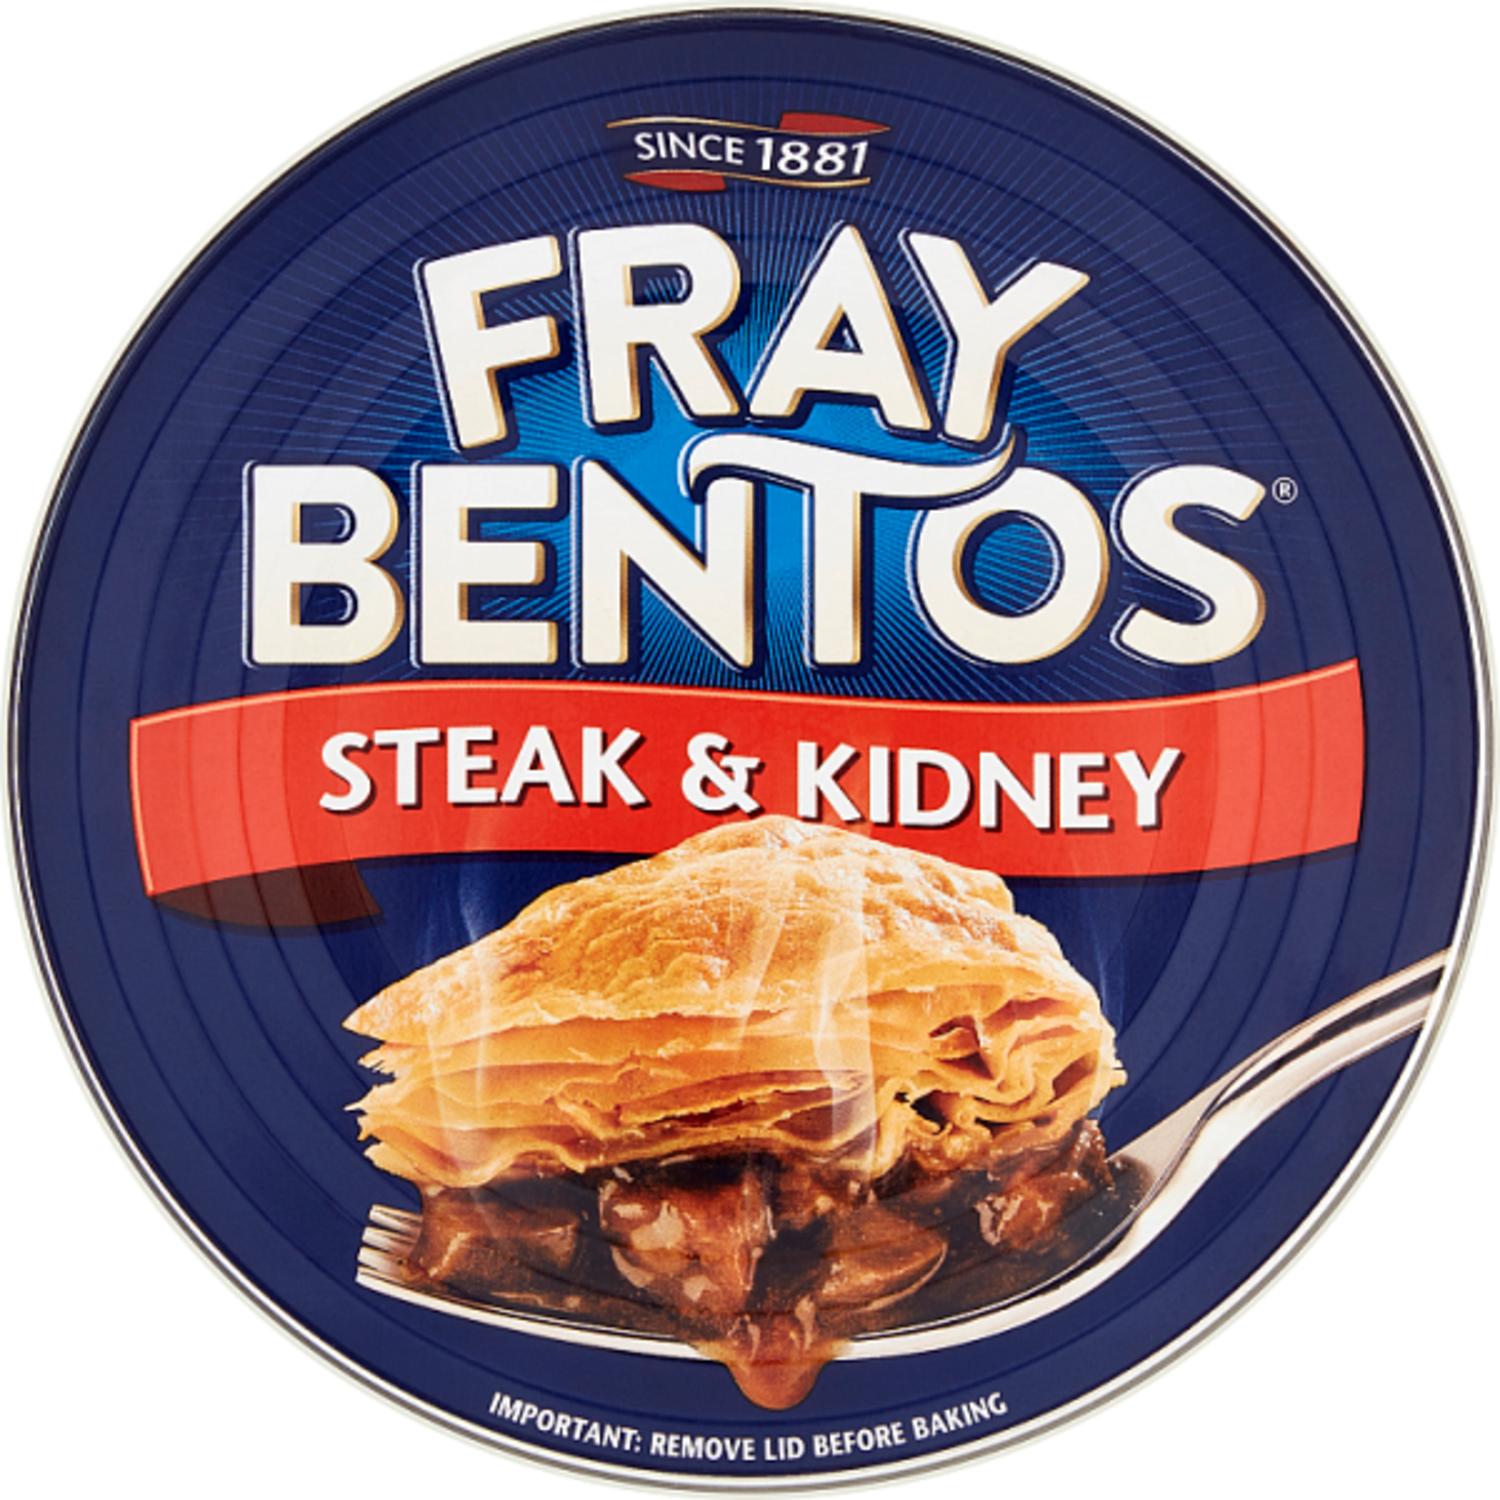 https://cdn.webshopapp.com/shops/263312/files/312390745/1500x4000x3/fray-bentos-fray-bentos-steak-kidney-pie-425g.jpg